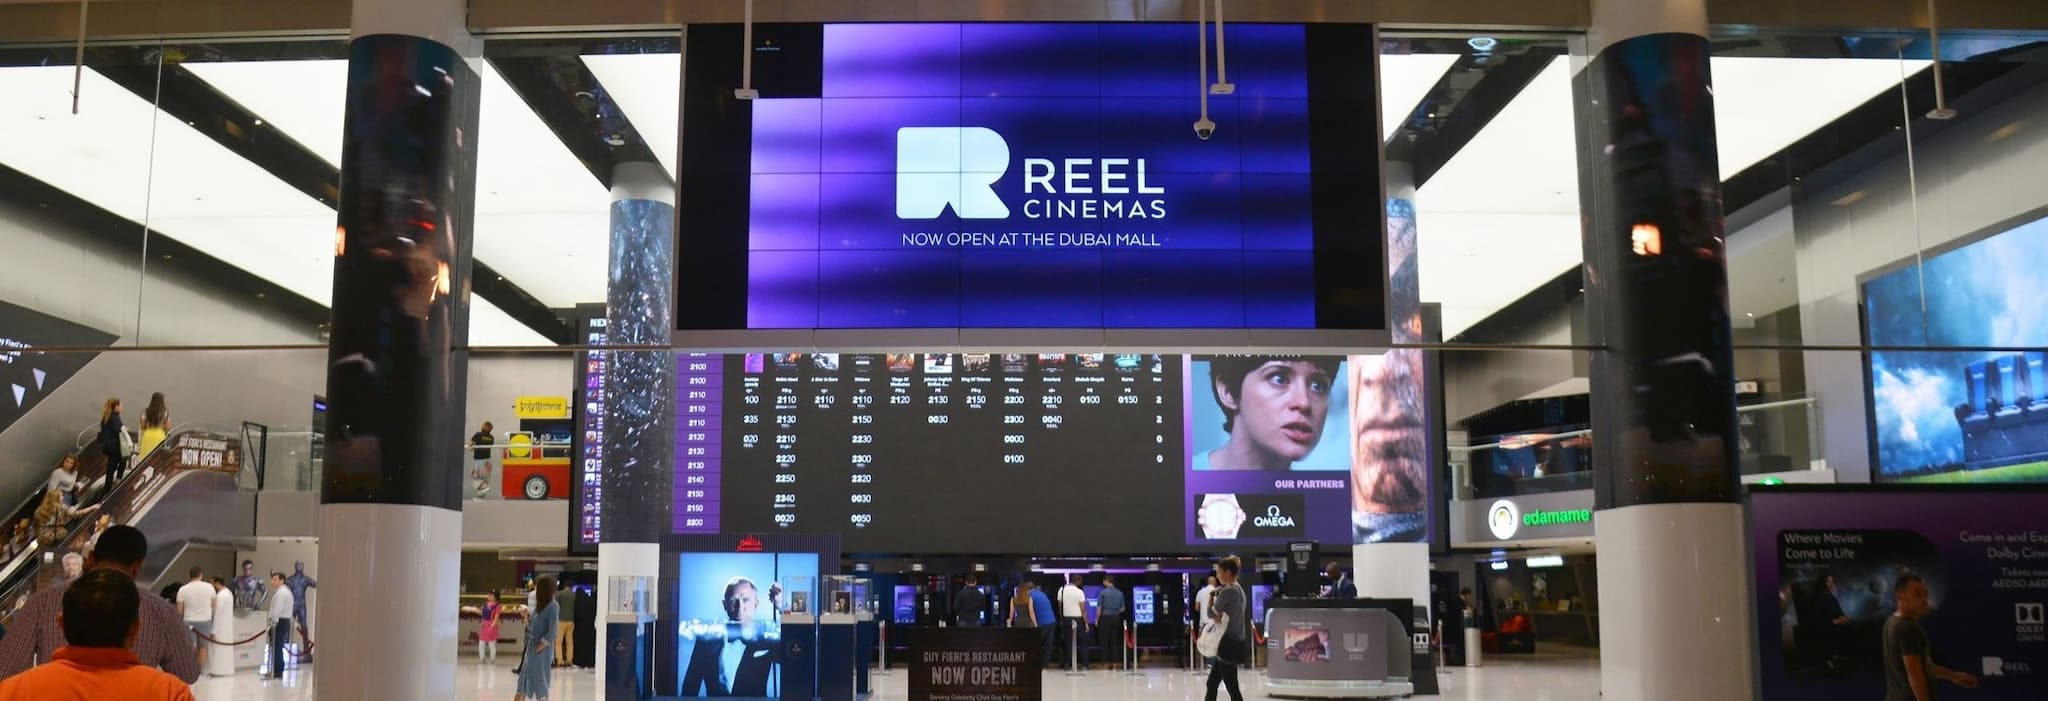 The Reel Cinemas of Dubai Mall